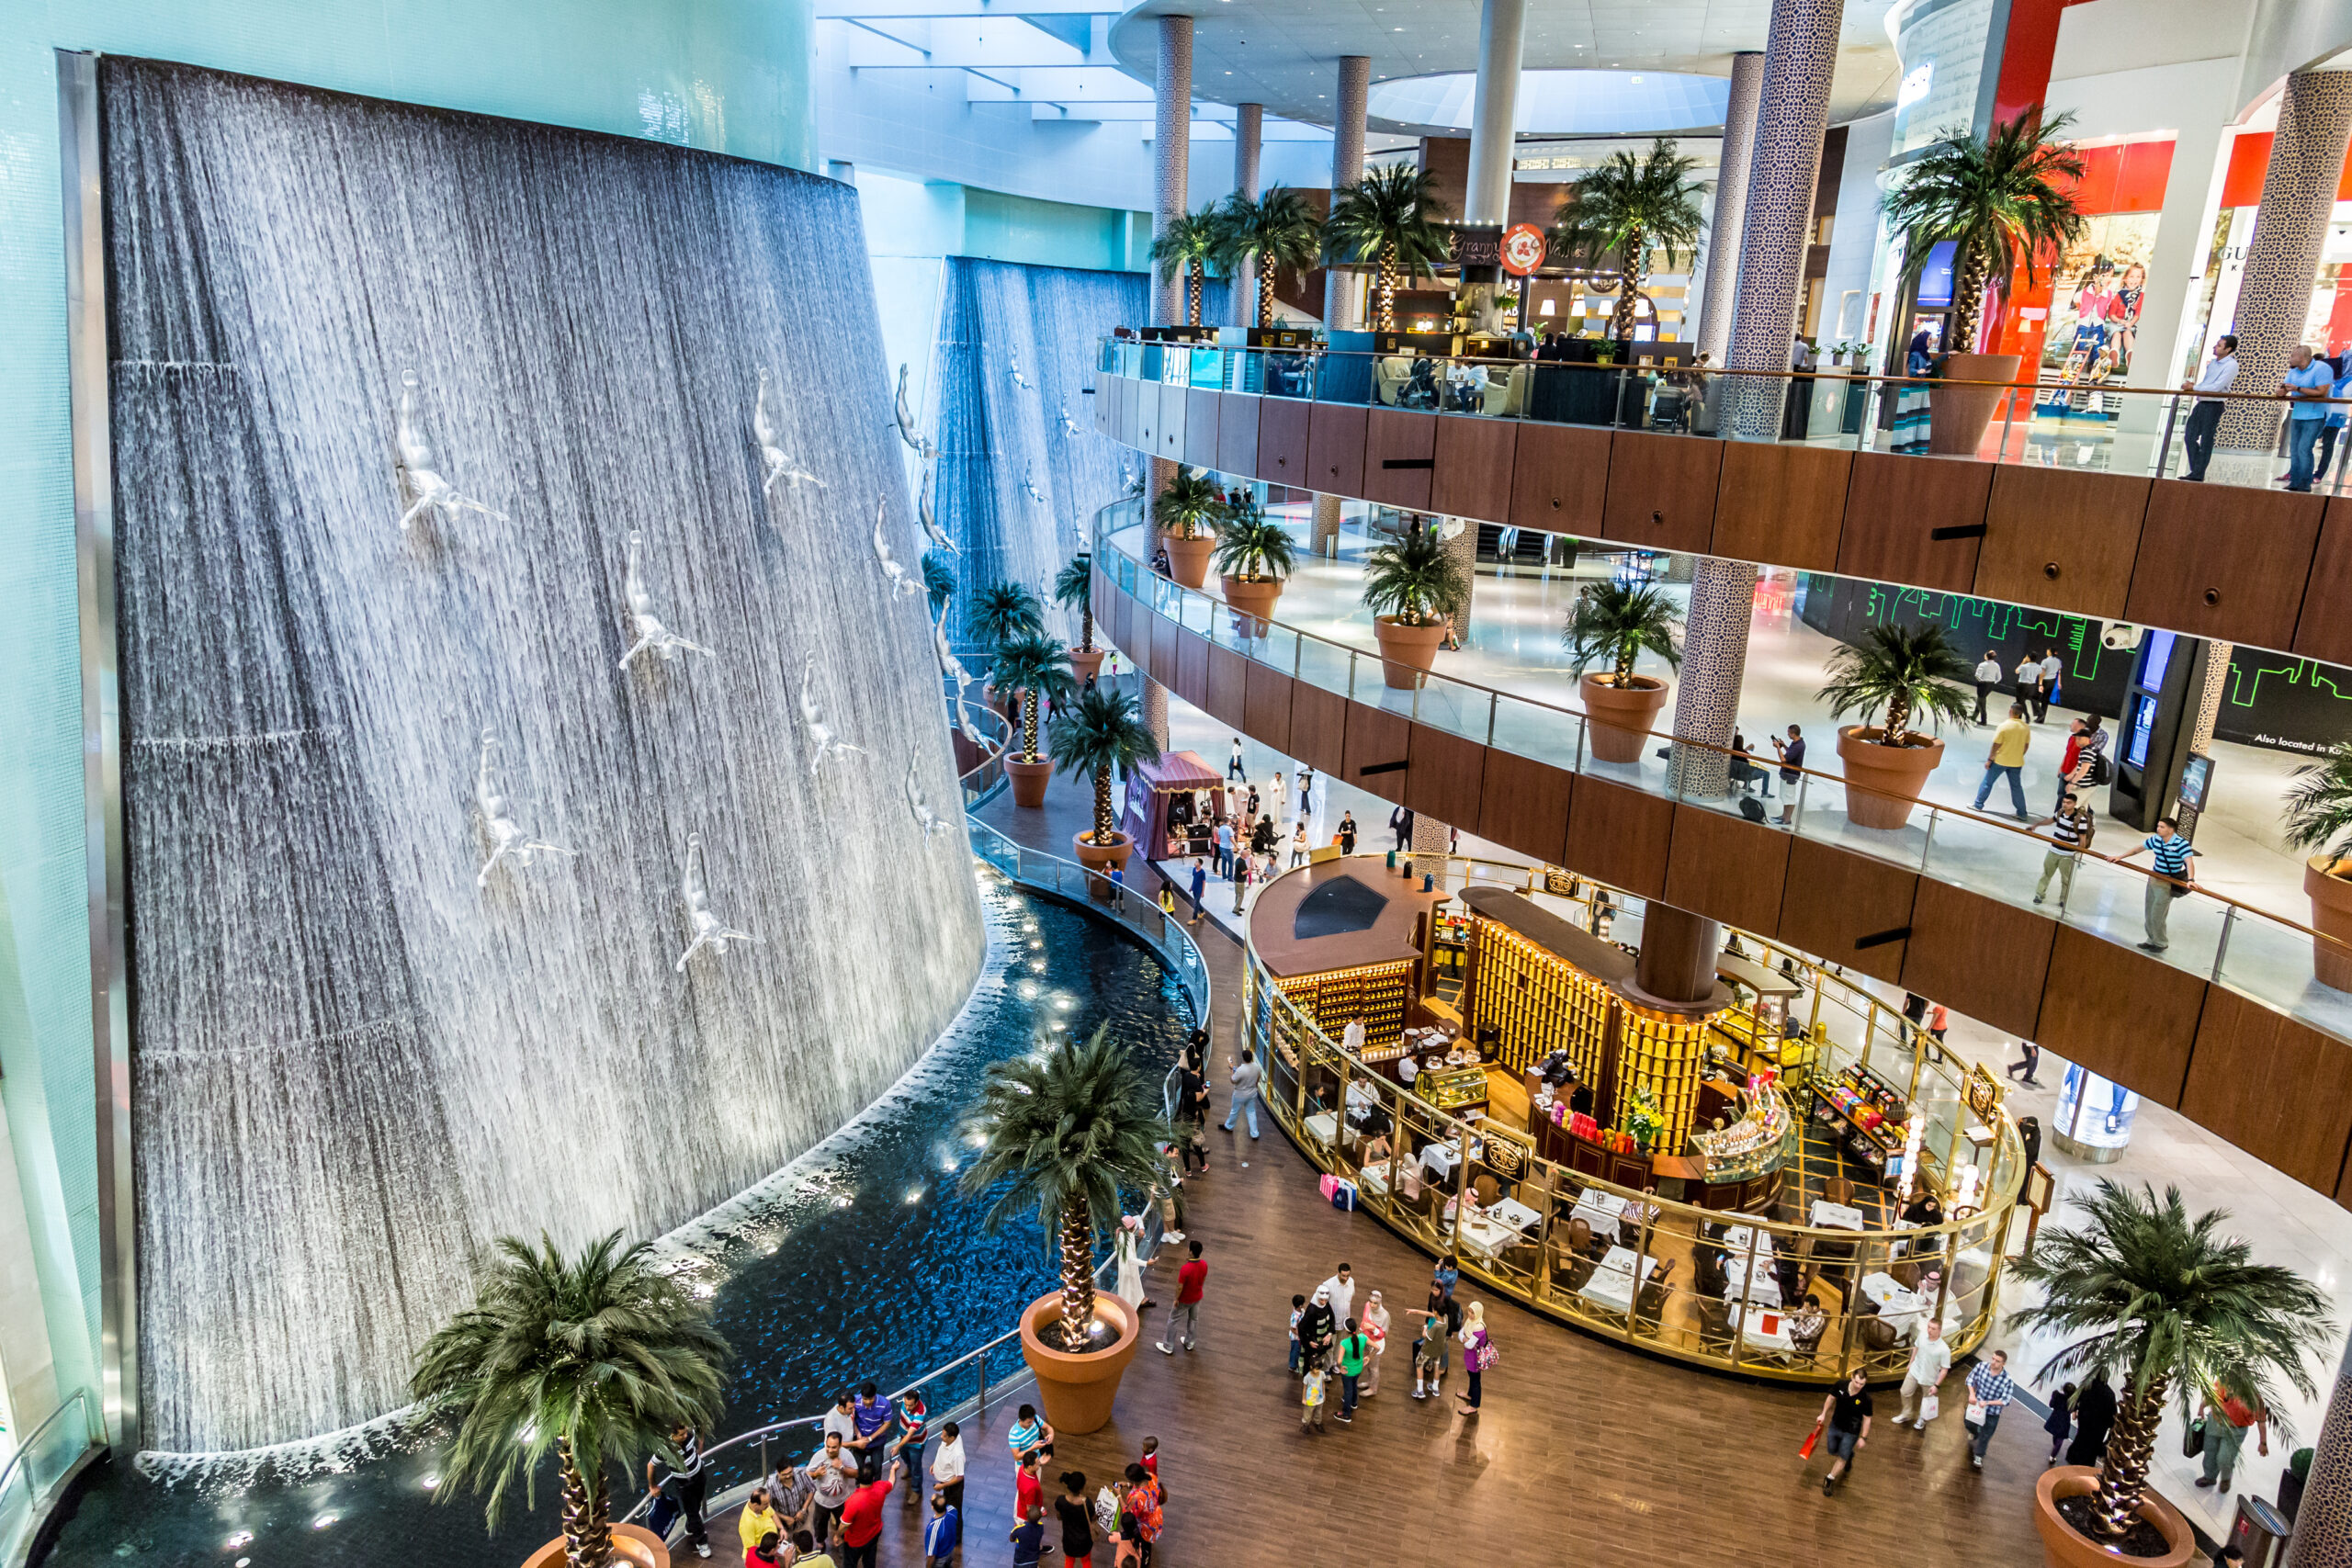 The Dubai Mall - Pearl divers waterfall